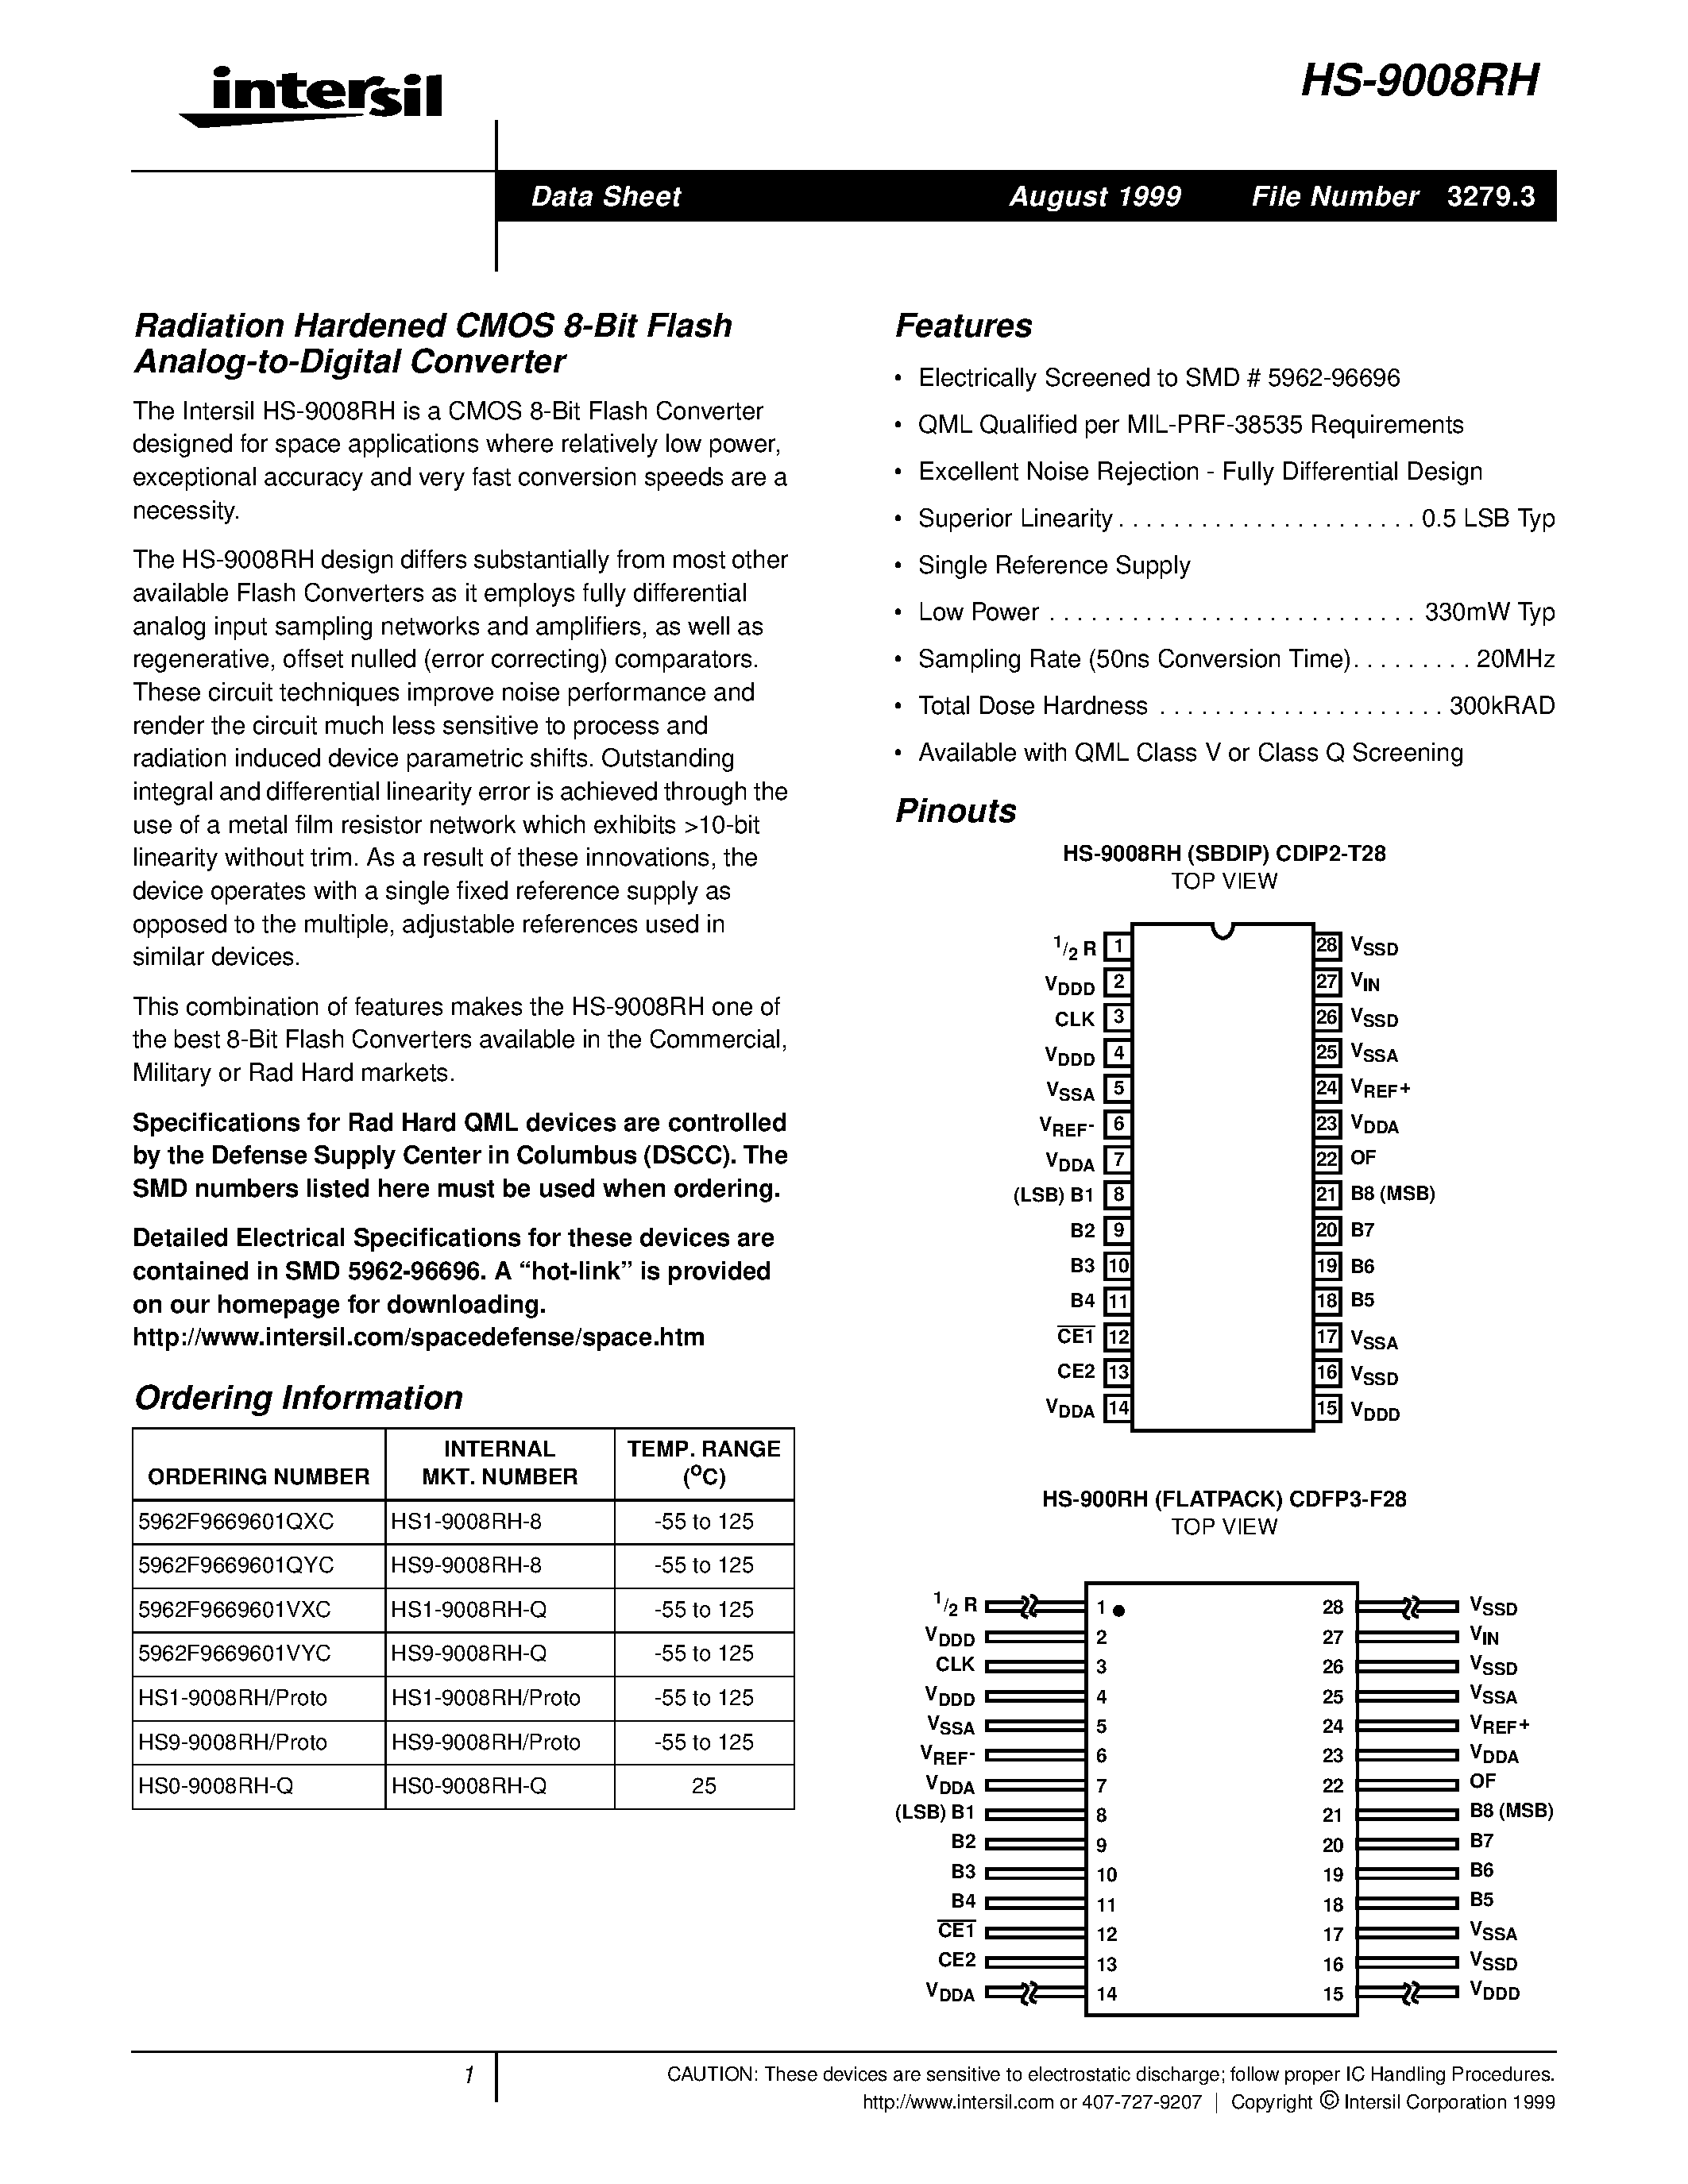 Даташит HS9-9008RH-Q - Radiation Hardened CMOS 8-Bit Flash Analog-to-Digital Converter страница 1